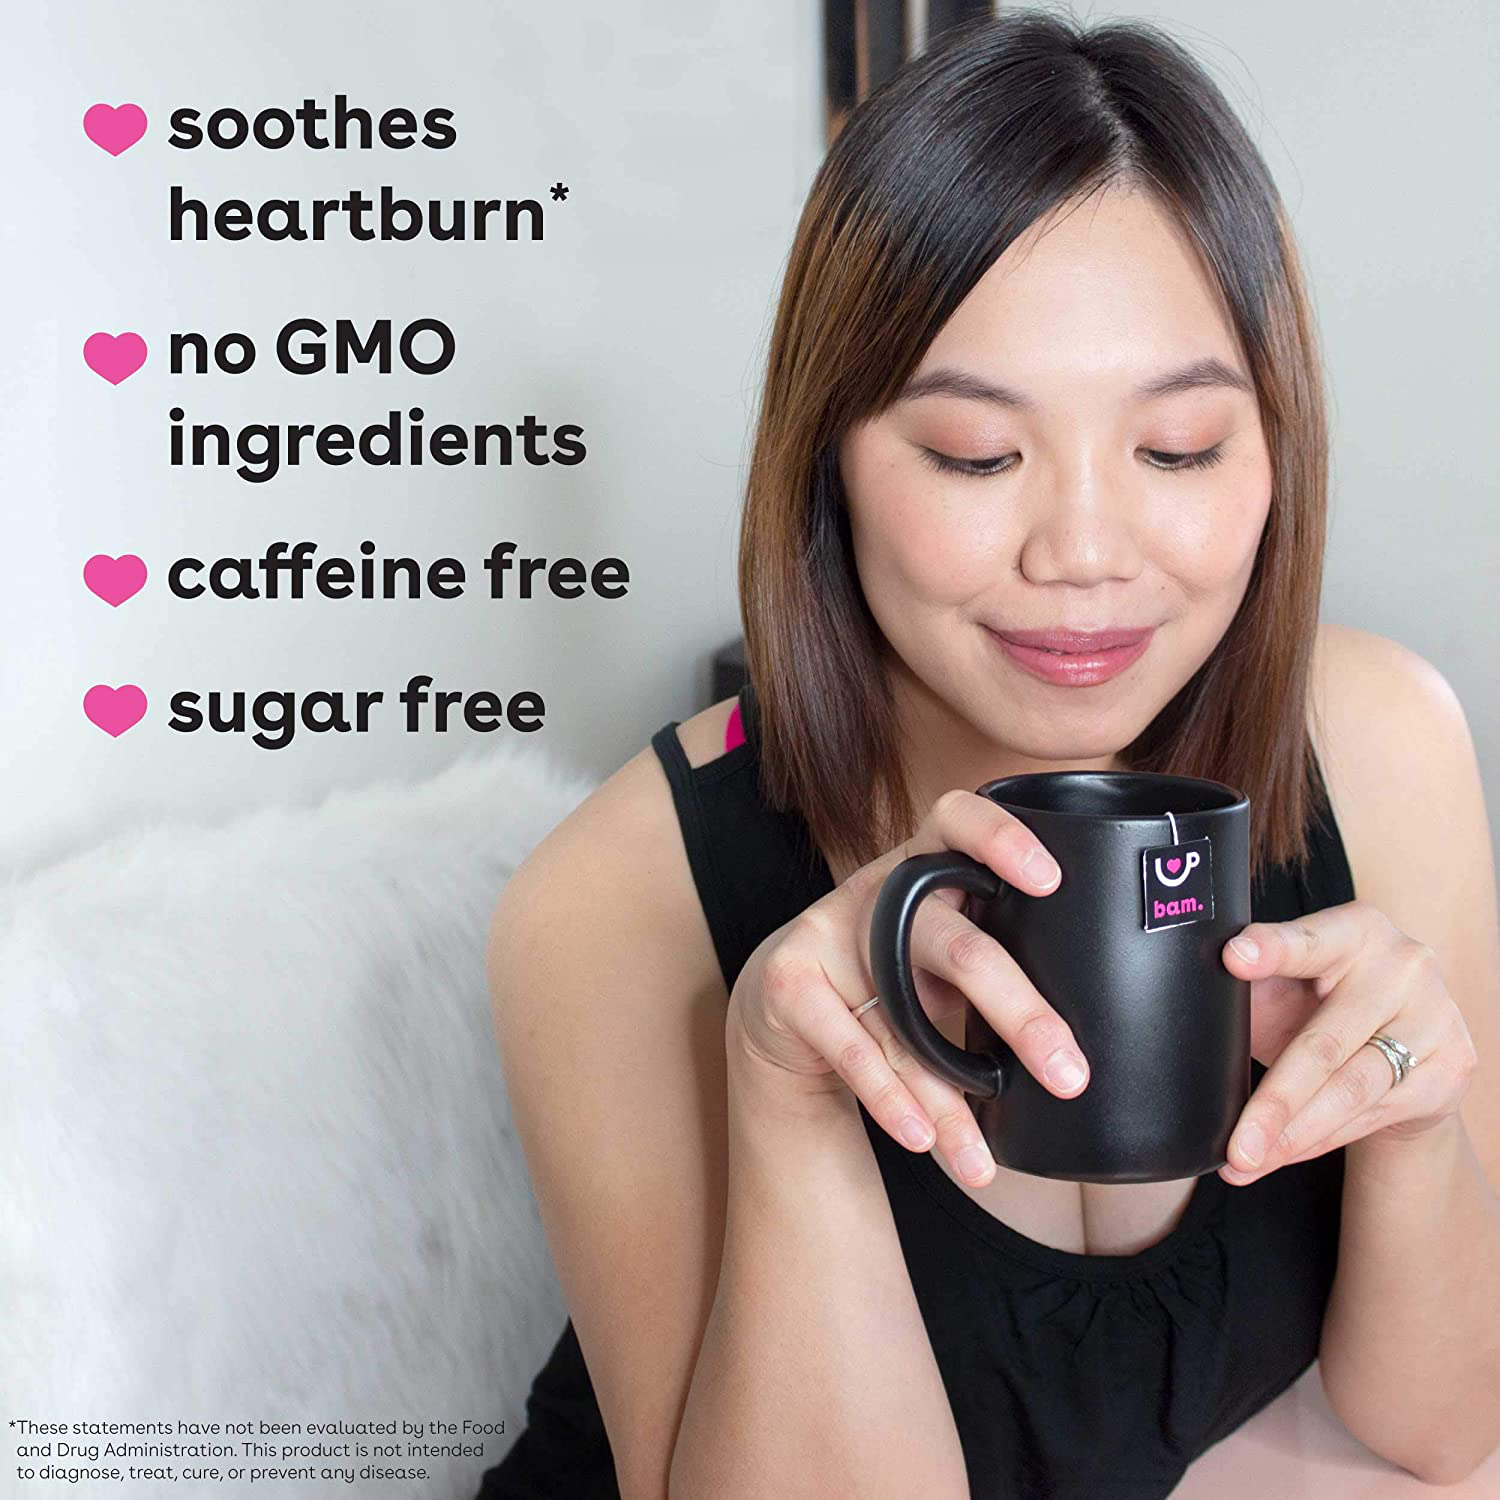 Bamboobies Women's Postpartum Tea, Black Cherry, Helps Balance Hormones and Mood, Organic, Non GMO, Caffeine Free, and Sugar Free, 20 Tea Bags